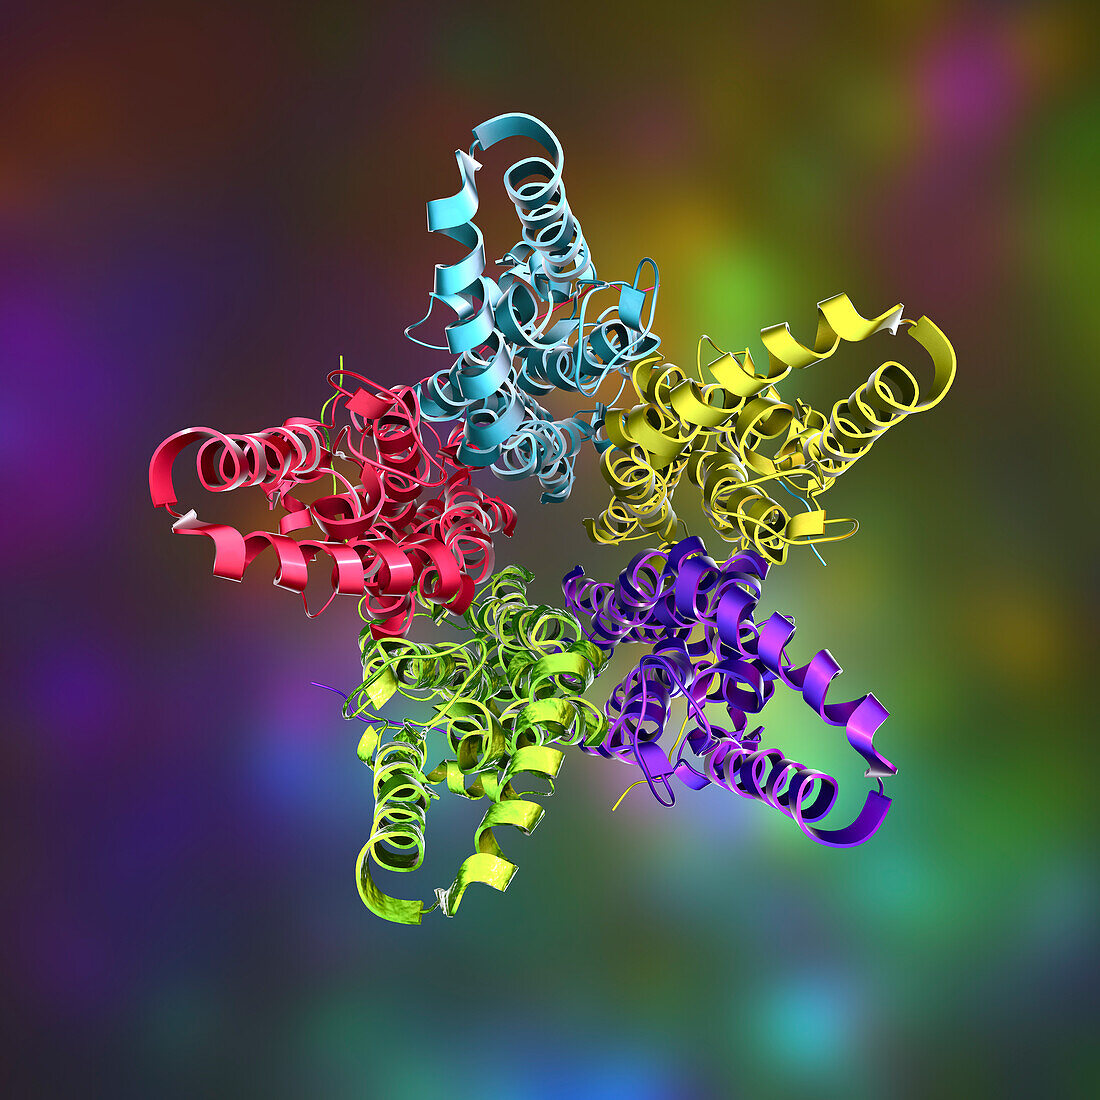 Bestrophin-1 protein molecule, illustration